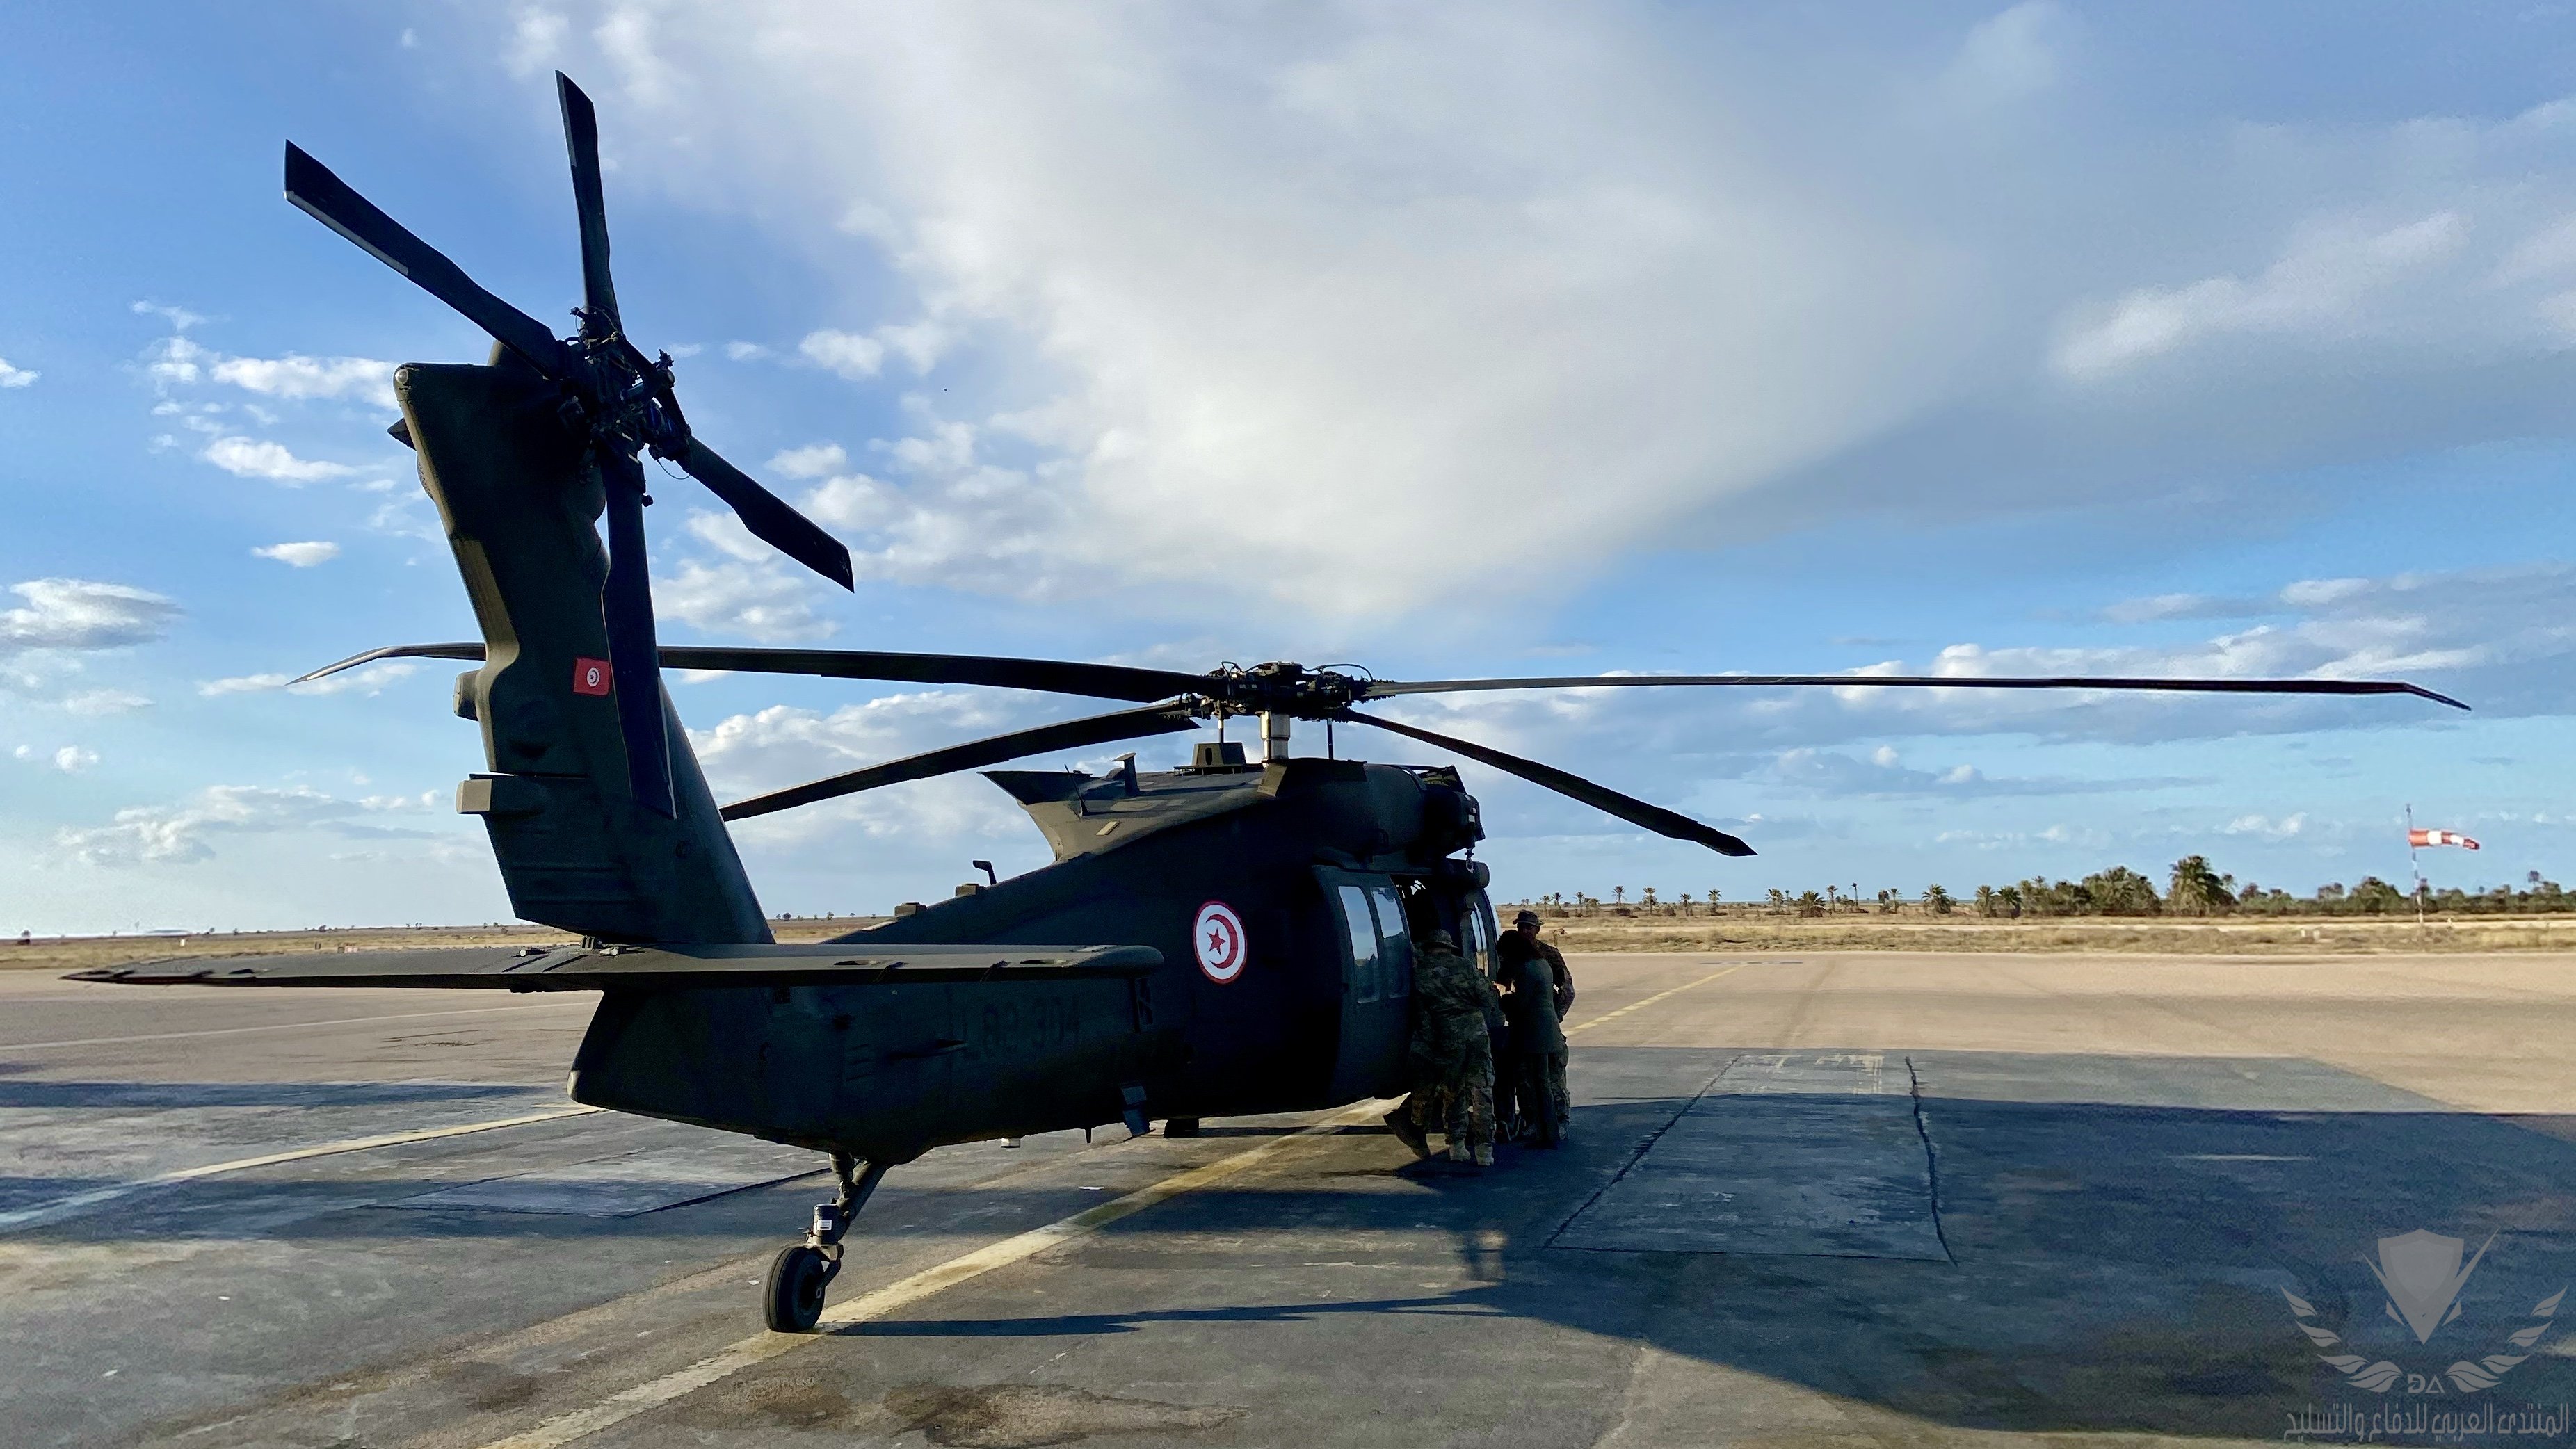 TUNISIAN UH-60 BLACK HAWK